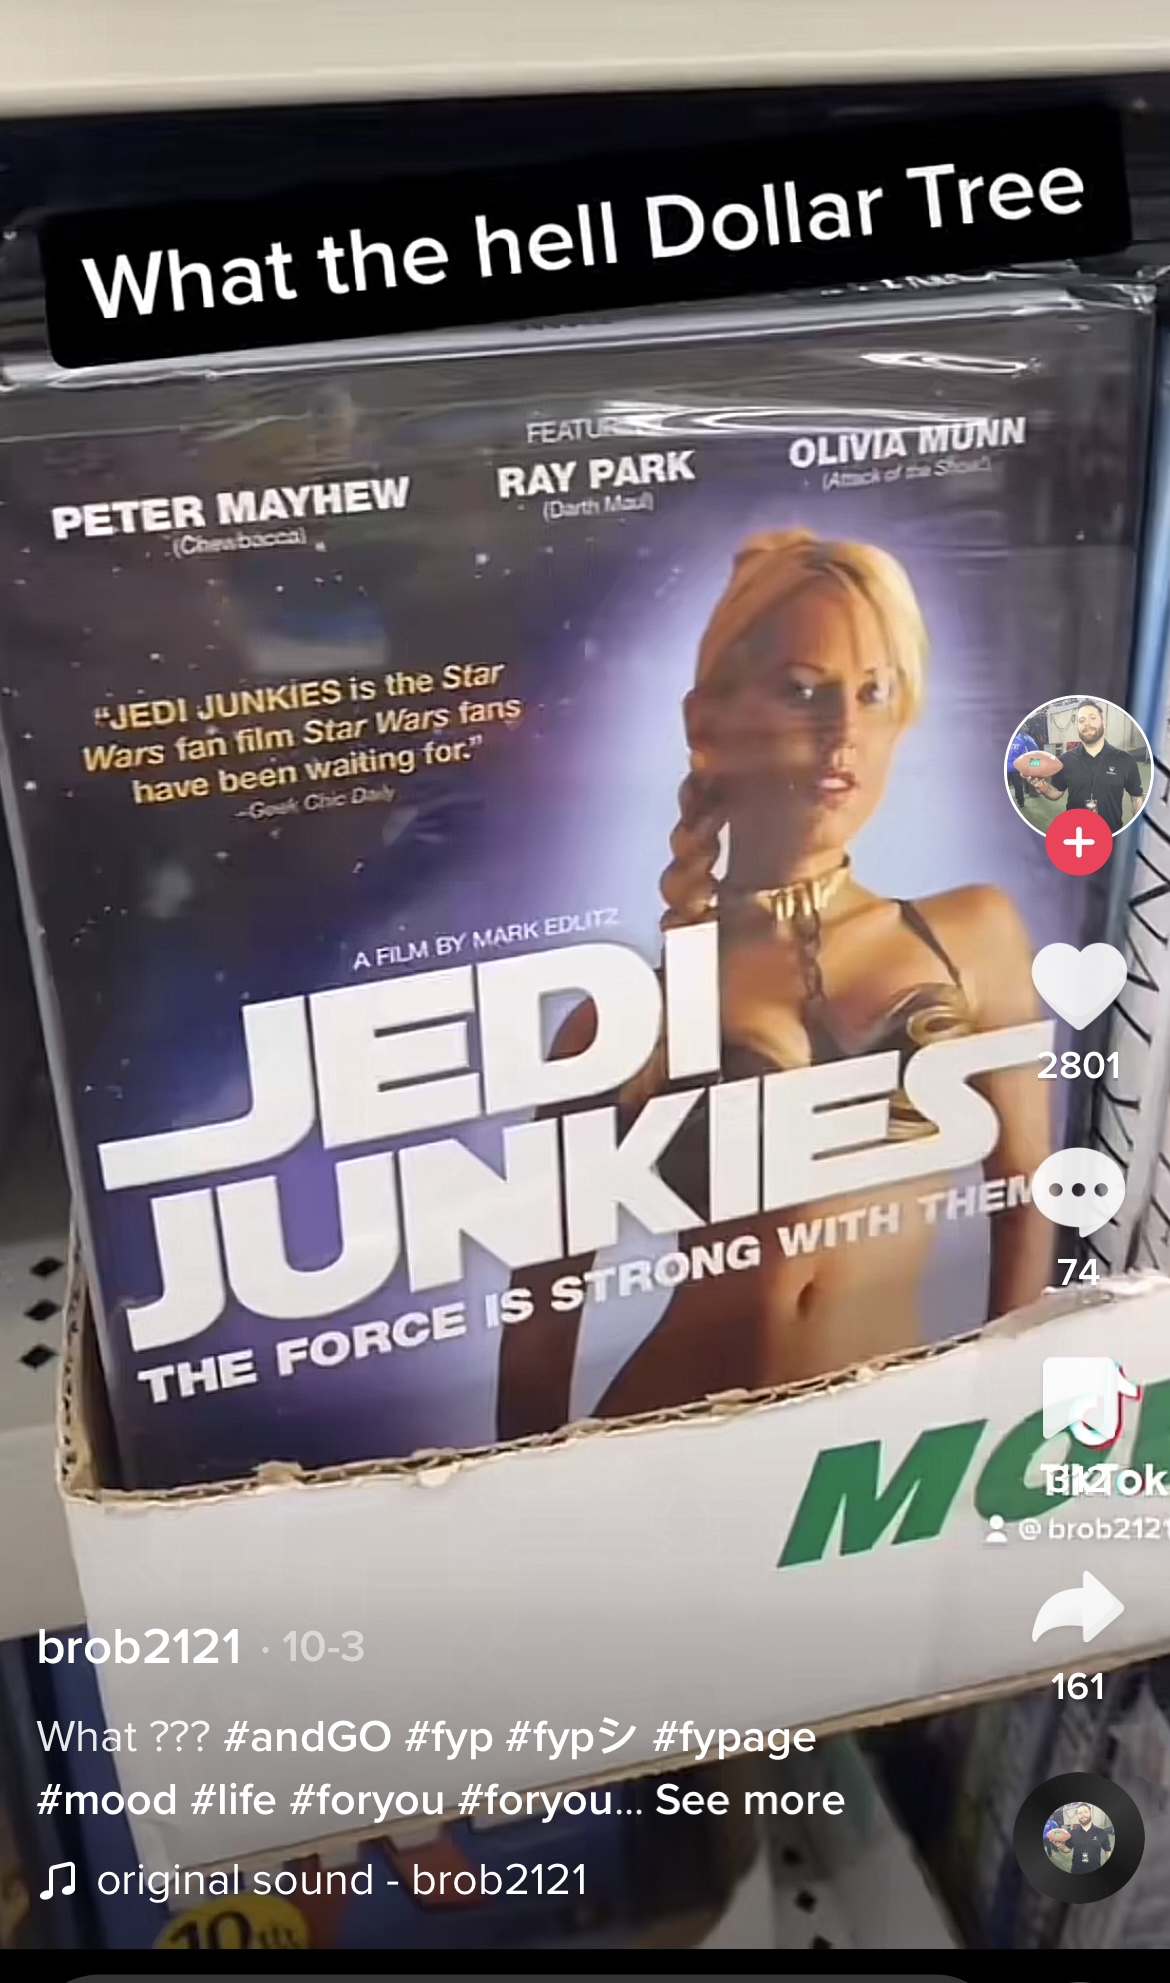 Jedi Junkies, A Documentary About Star Wars Fandom